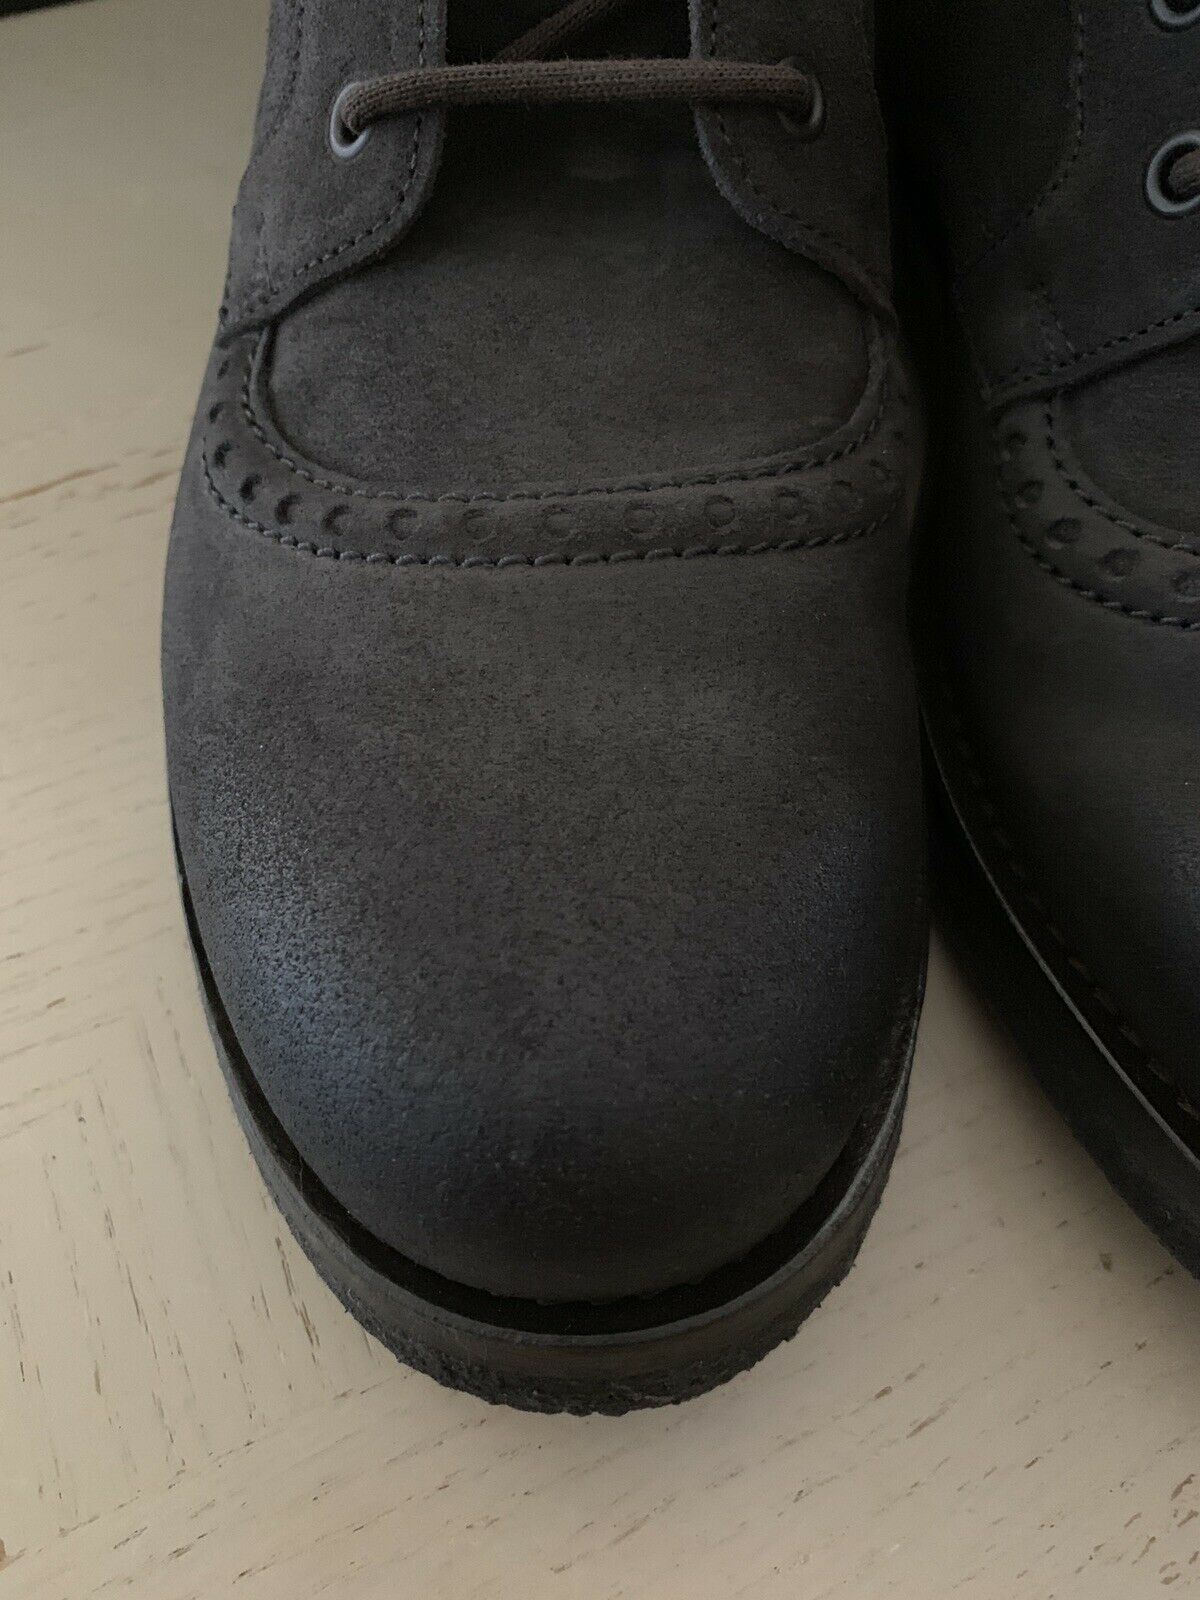 NIB $810 Bottega Veneta Mens Leather Boots Shoes DK Gray 8.5 US/41.5 Eu